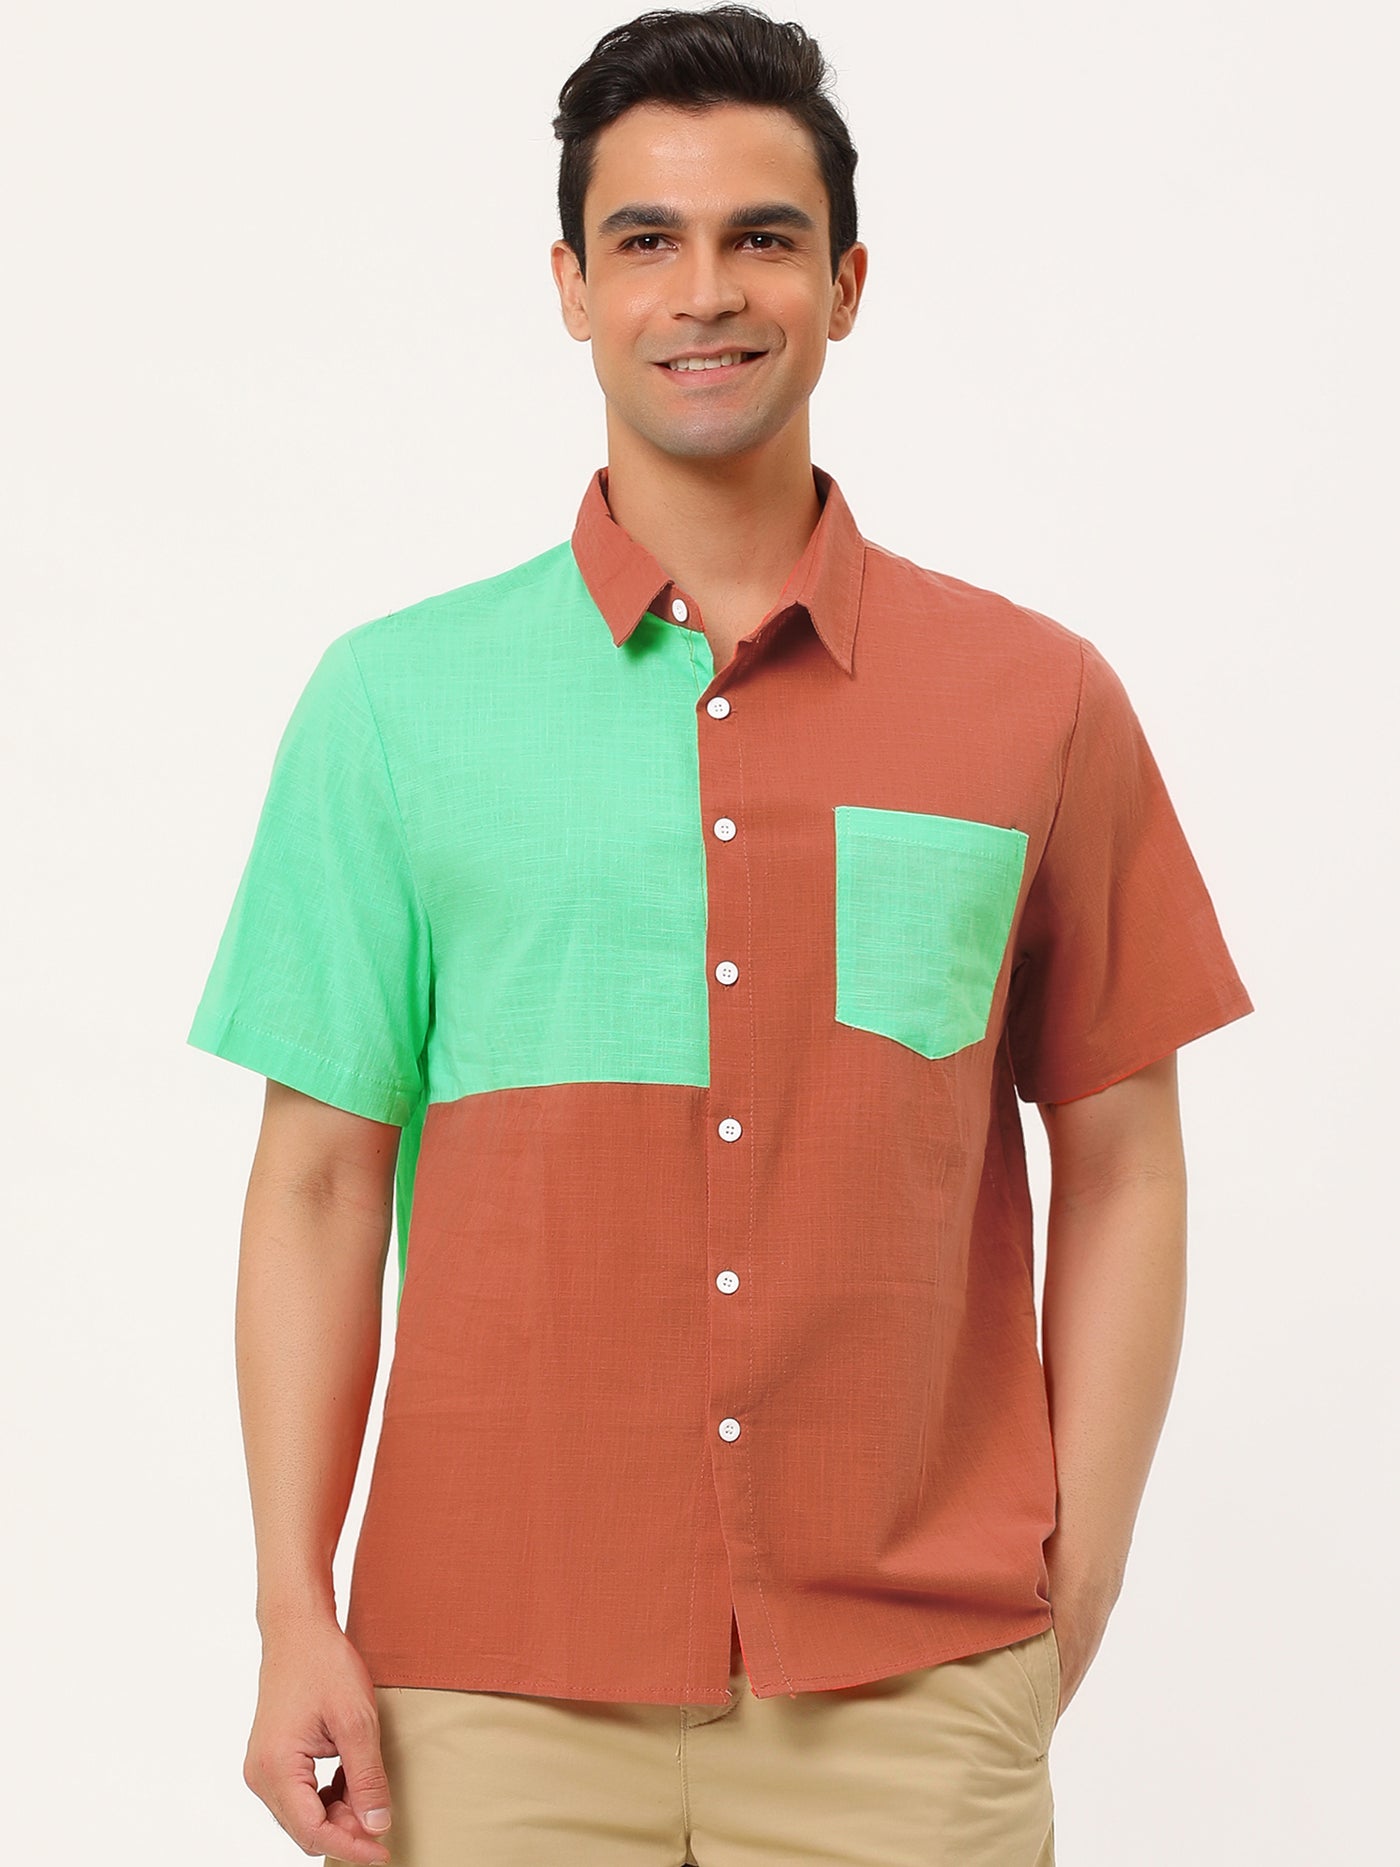 Bublédon Casual Summer Button Cotton Patchwork Print Shirt